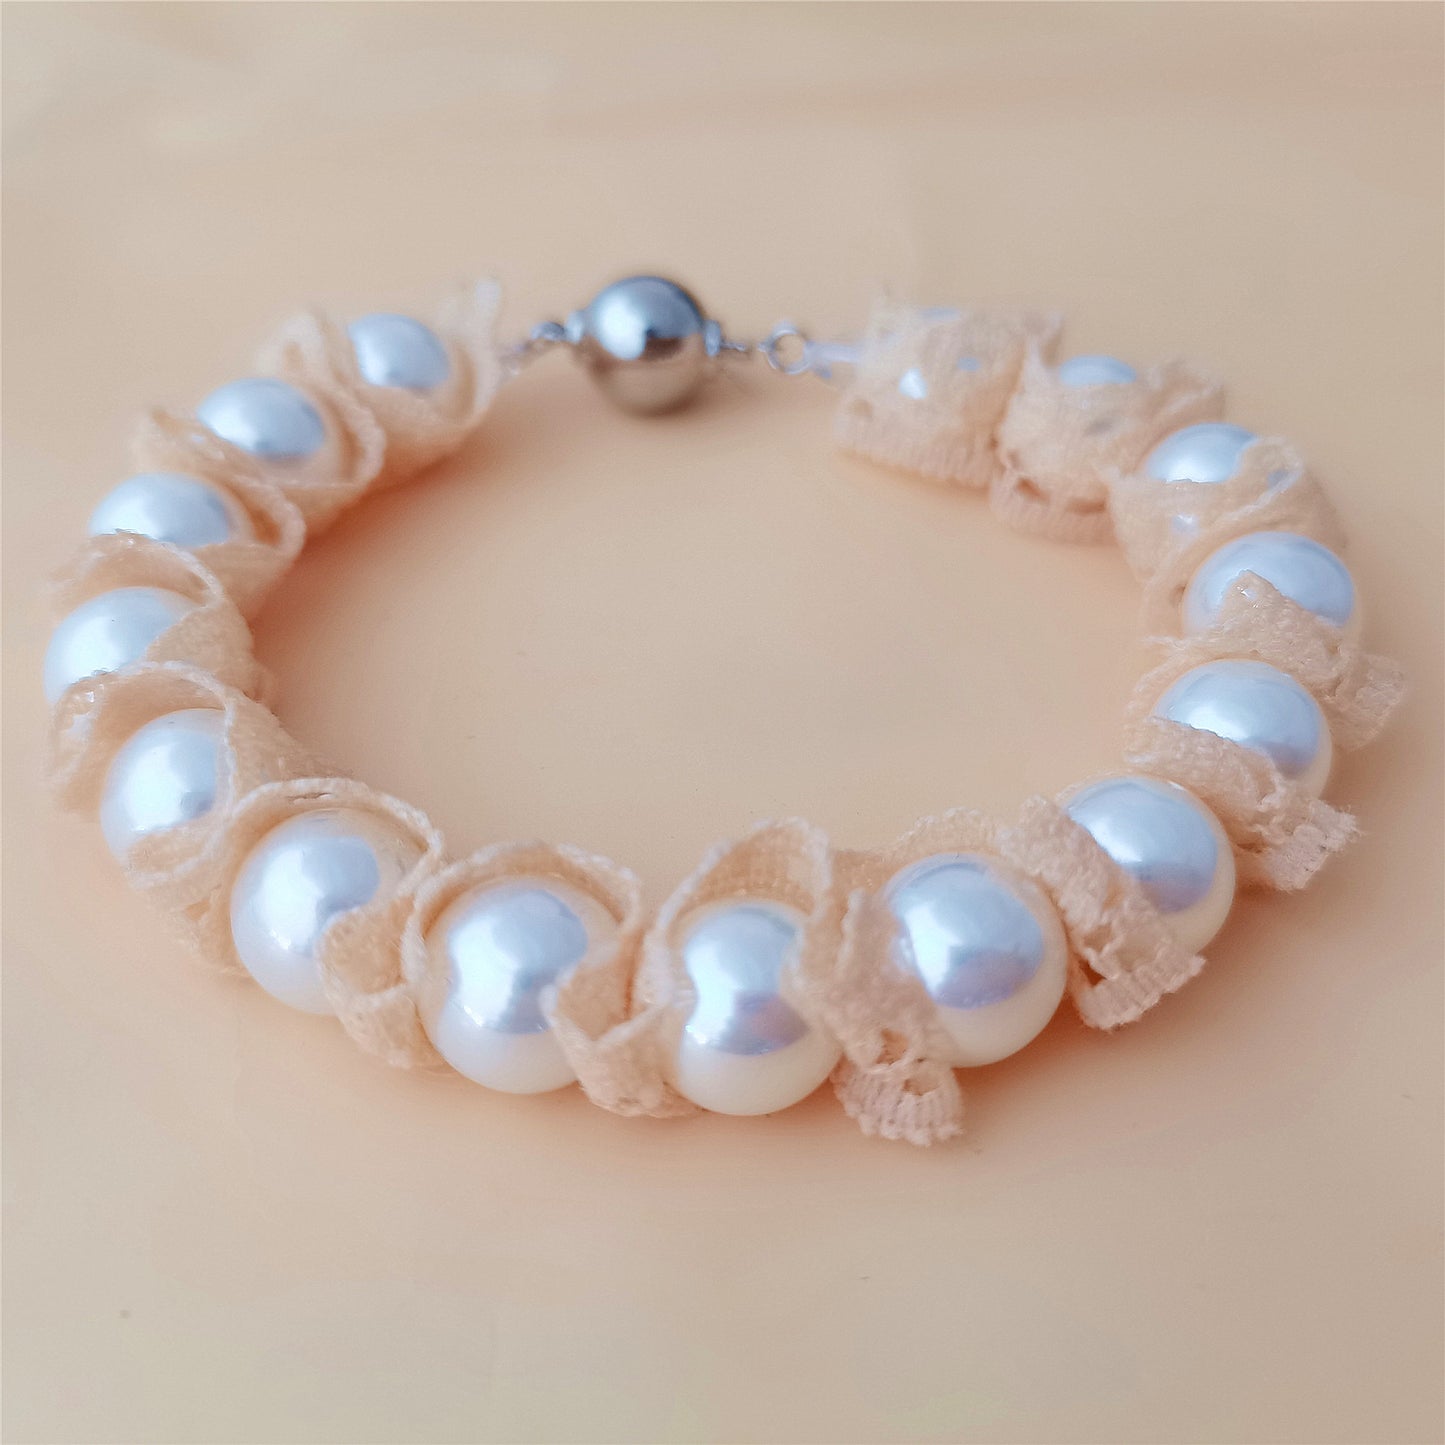 High Quality 10MM White Shell Lace Pearl Bracelet 7" South Sea Beaded Bangle